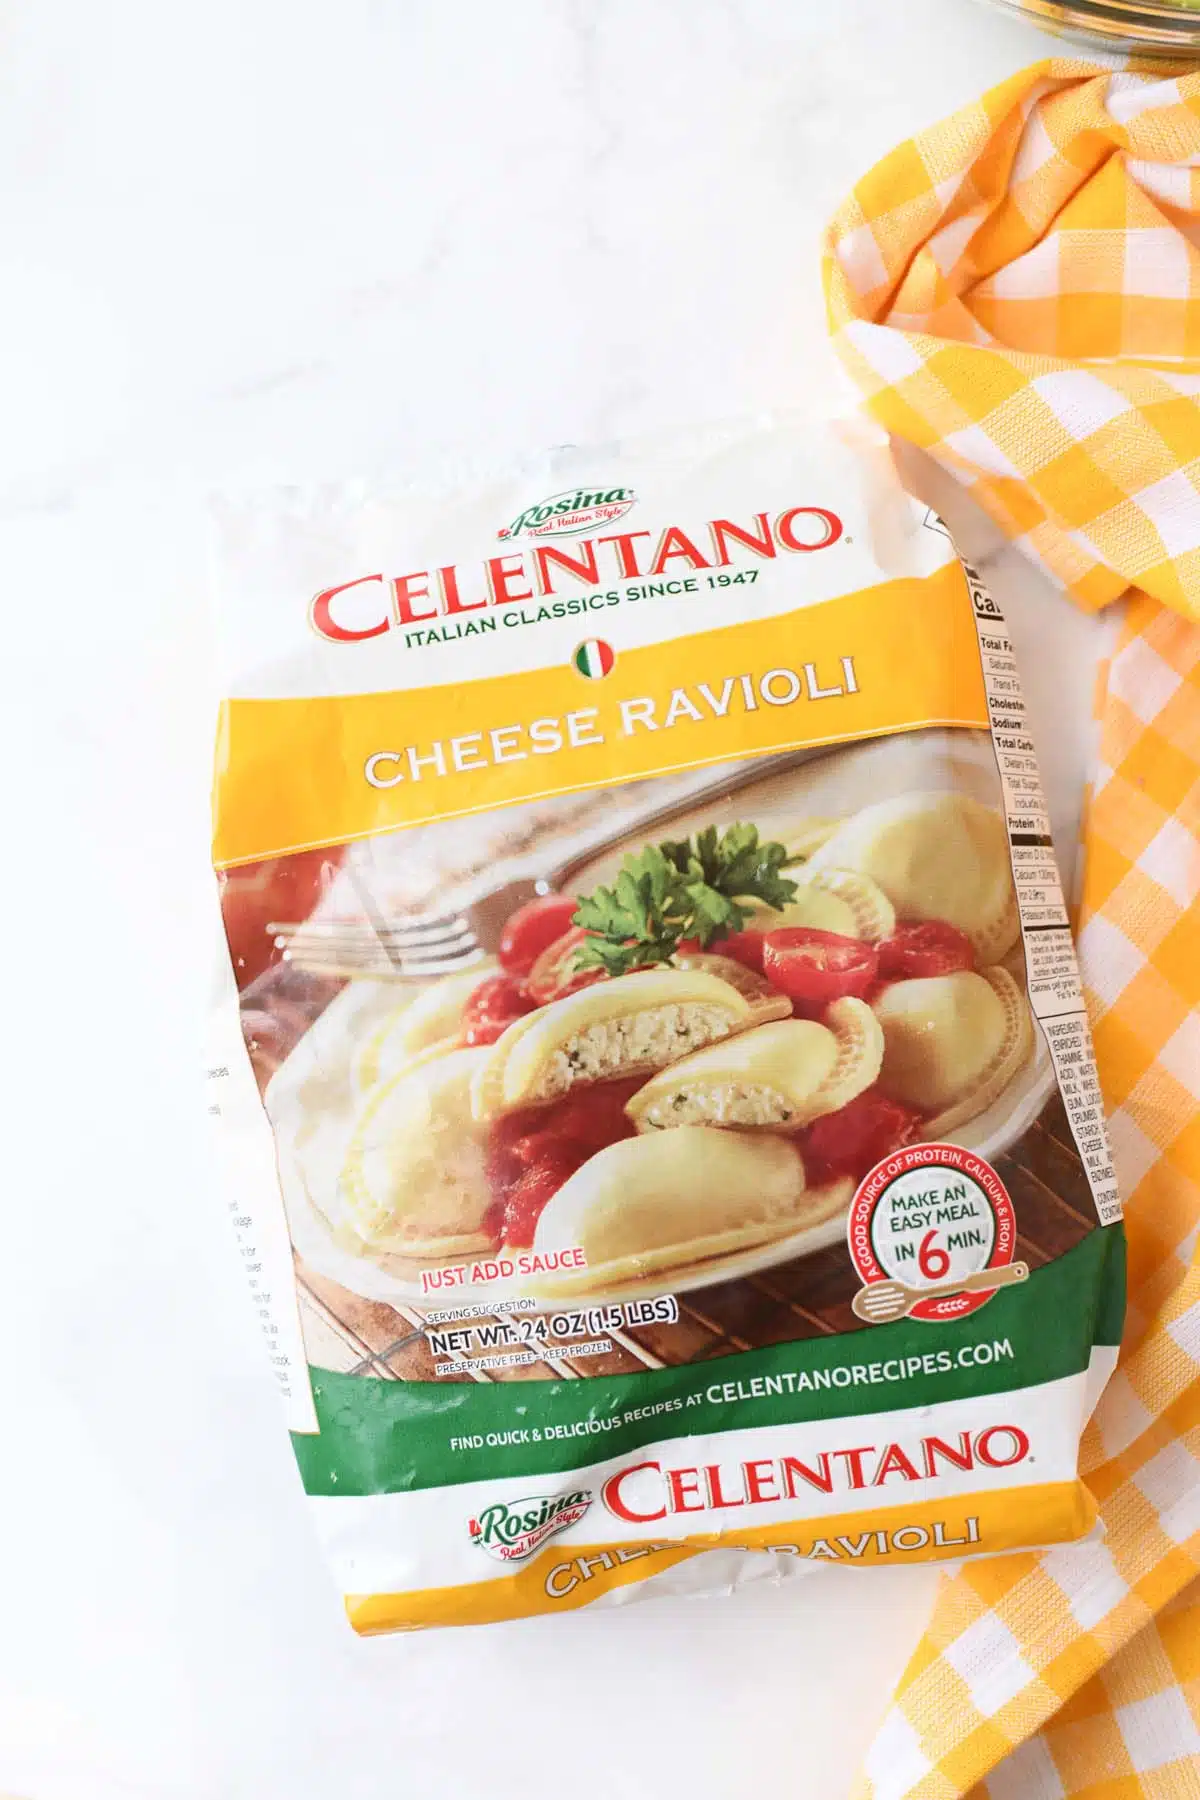 A bag of Celentano Cheese Ravioli with a yellow napkin.